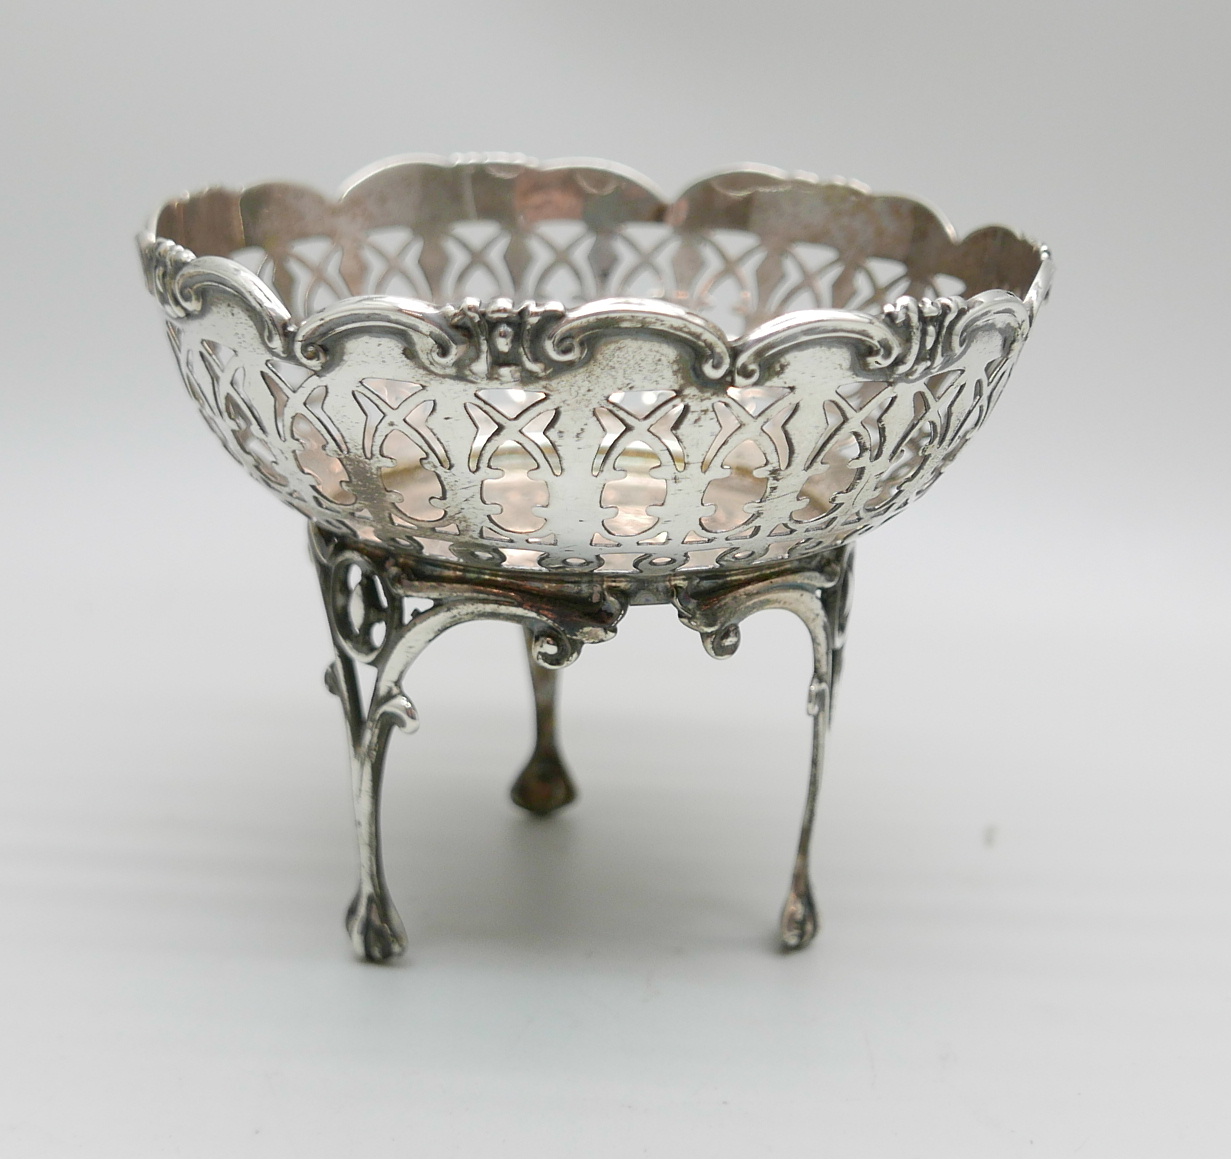 A pierced silver dish, Birmingham 1912, 75g, diameter 9cm